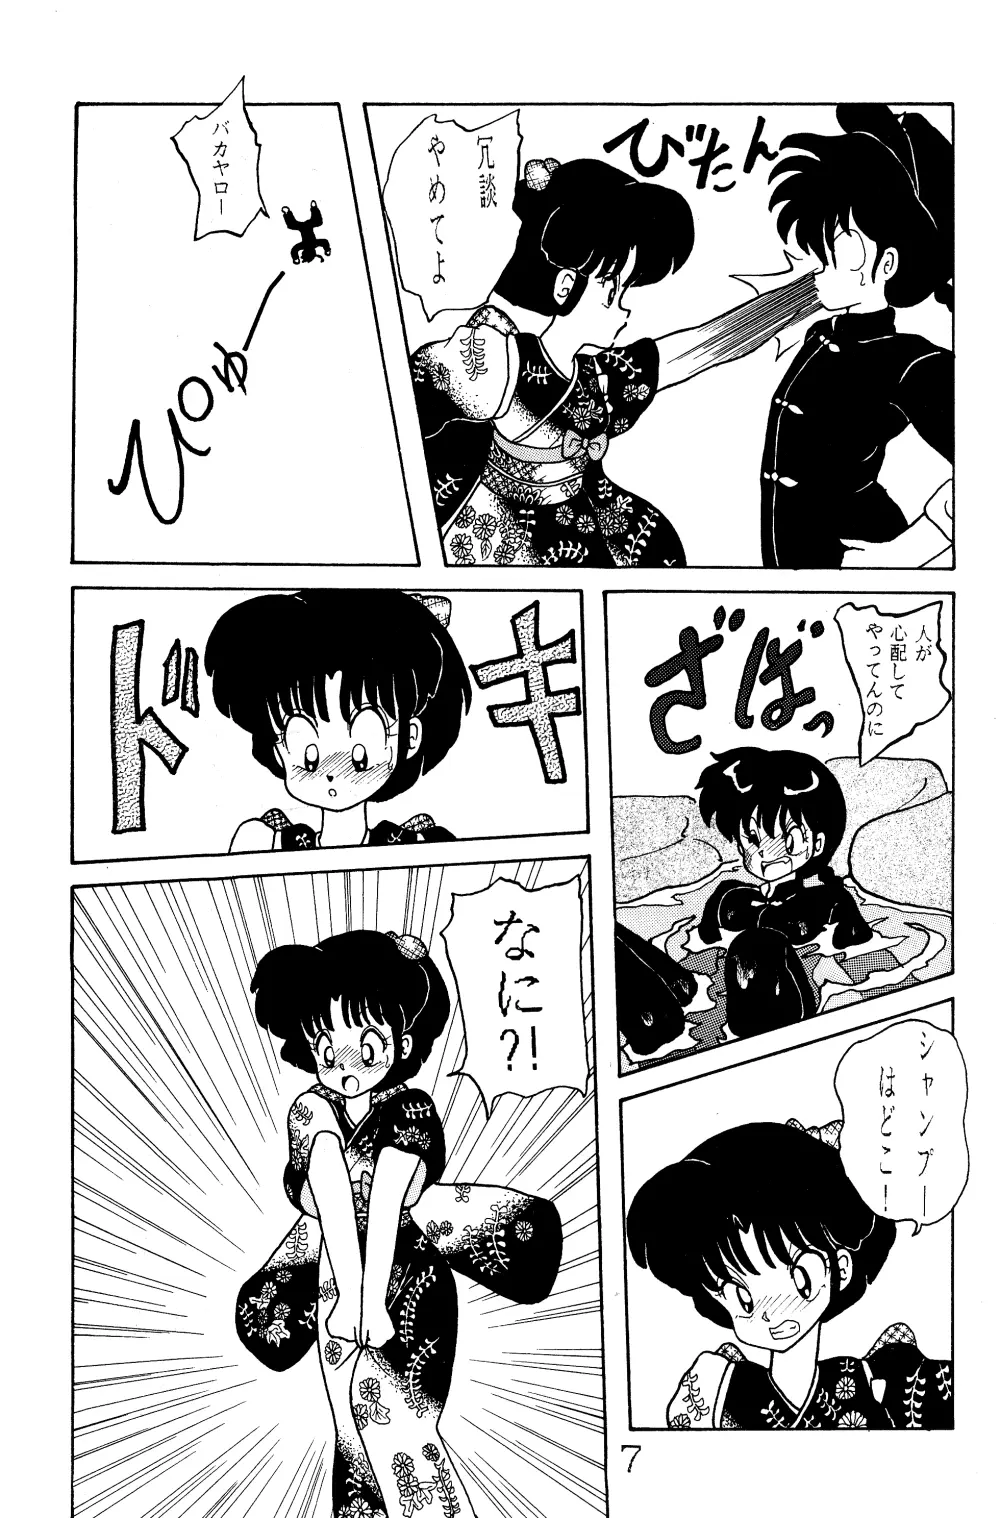 NOTORIOUS らんま1/2 スペシャル - page6